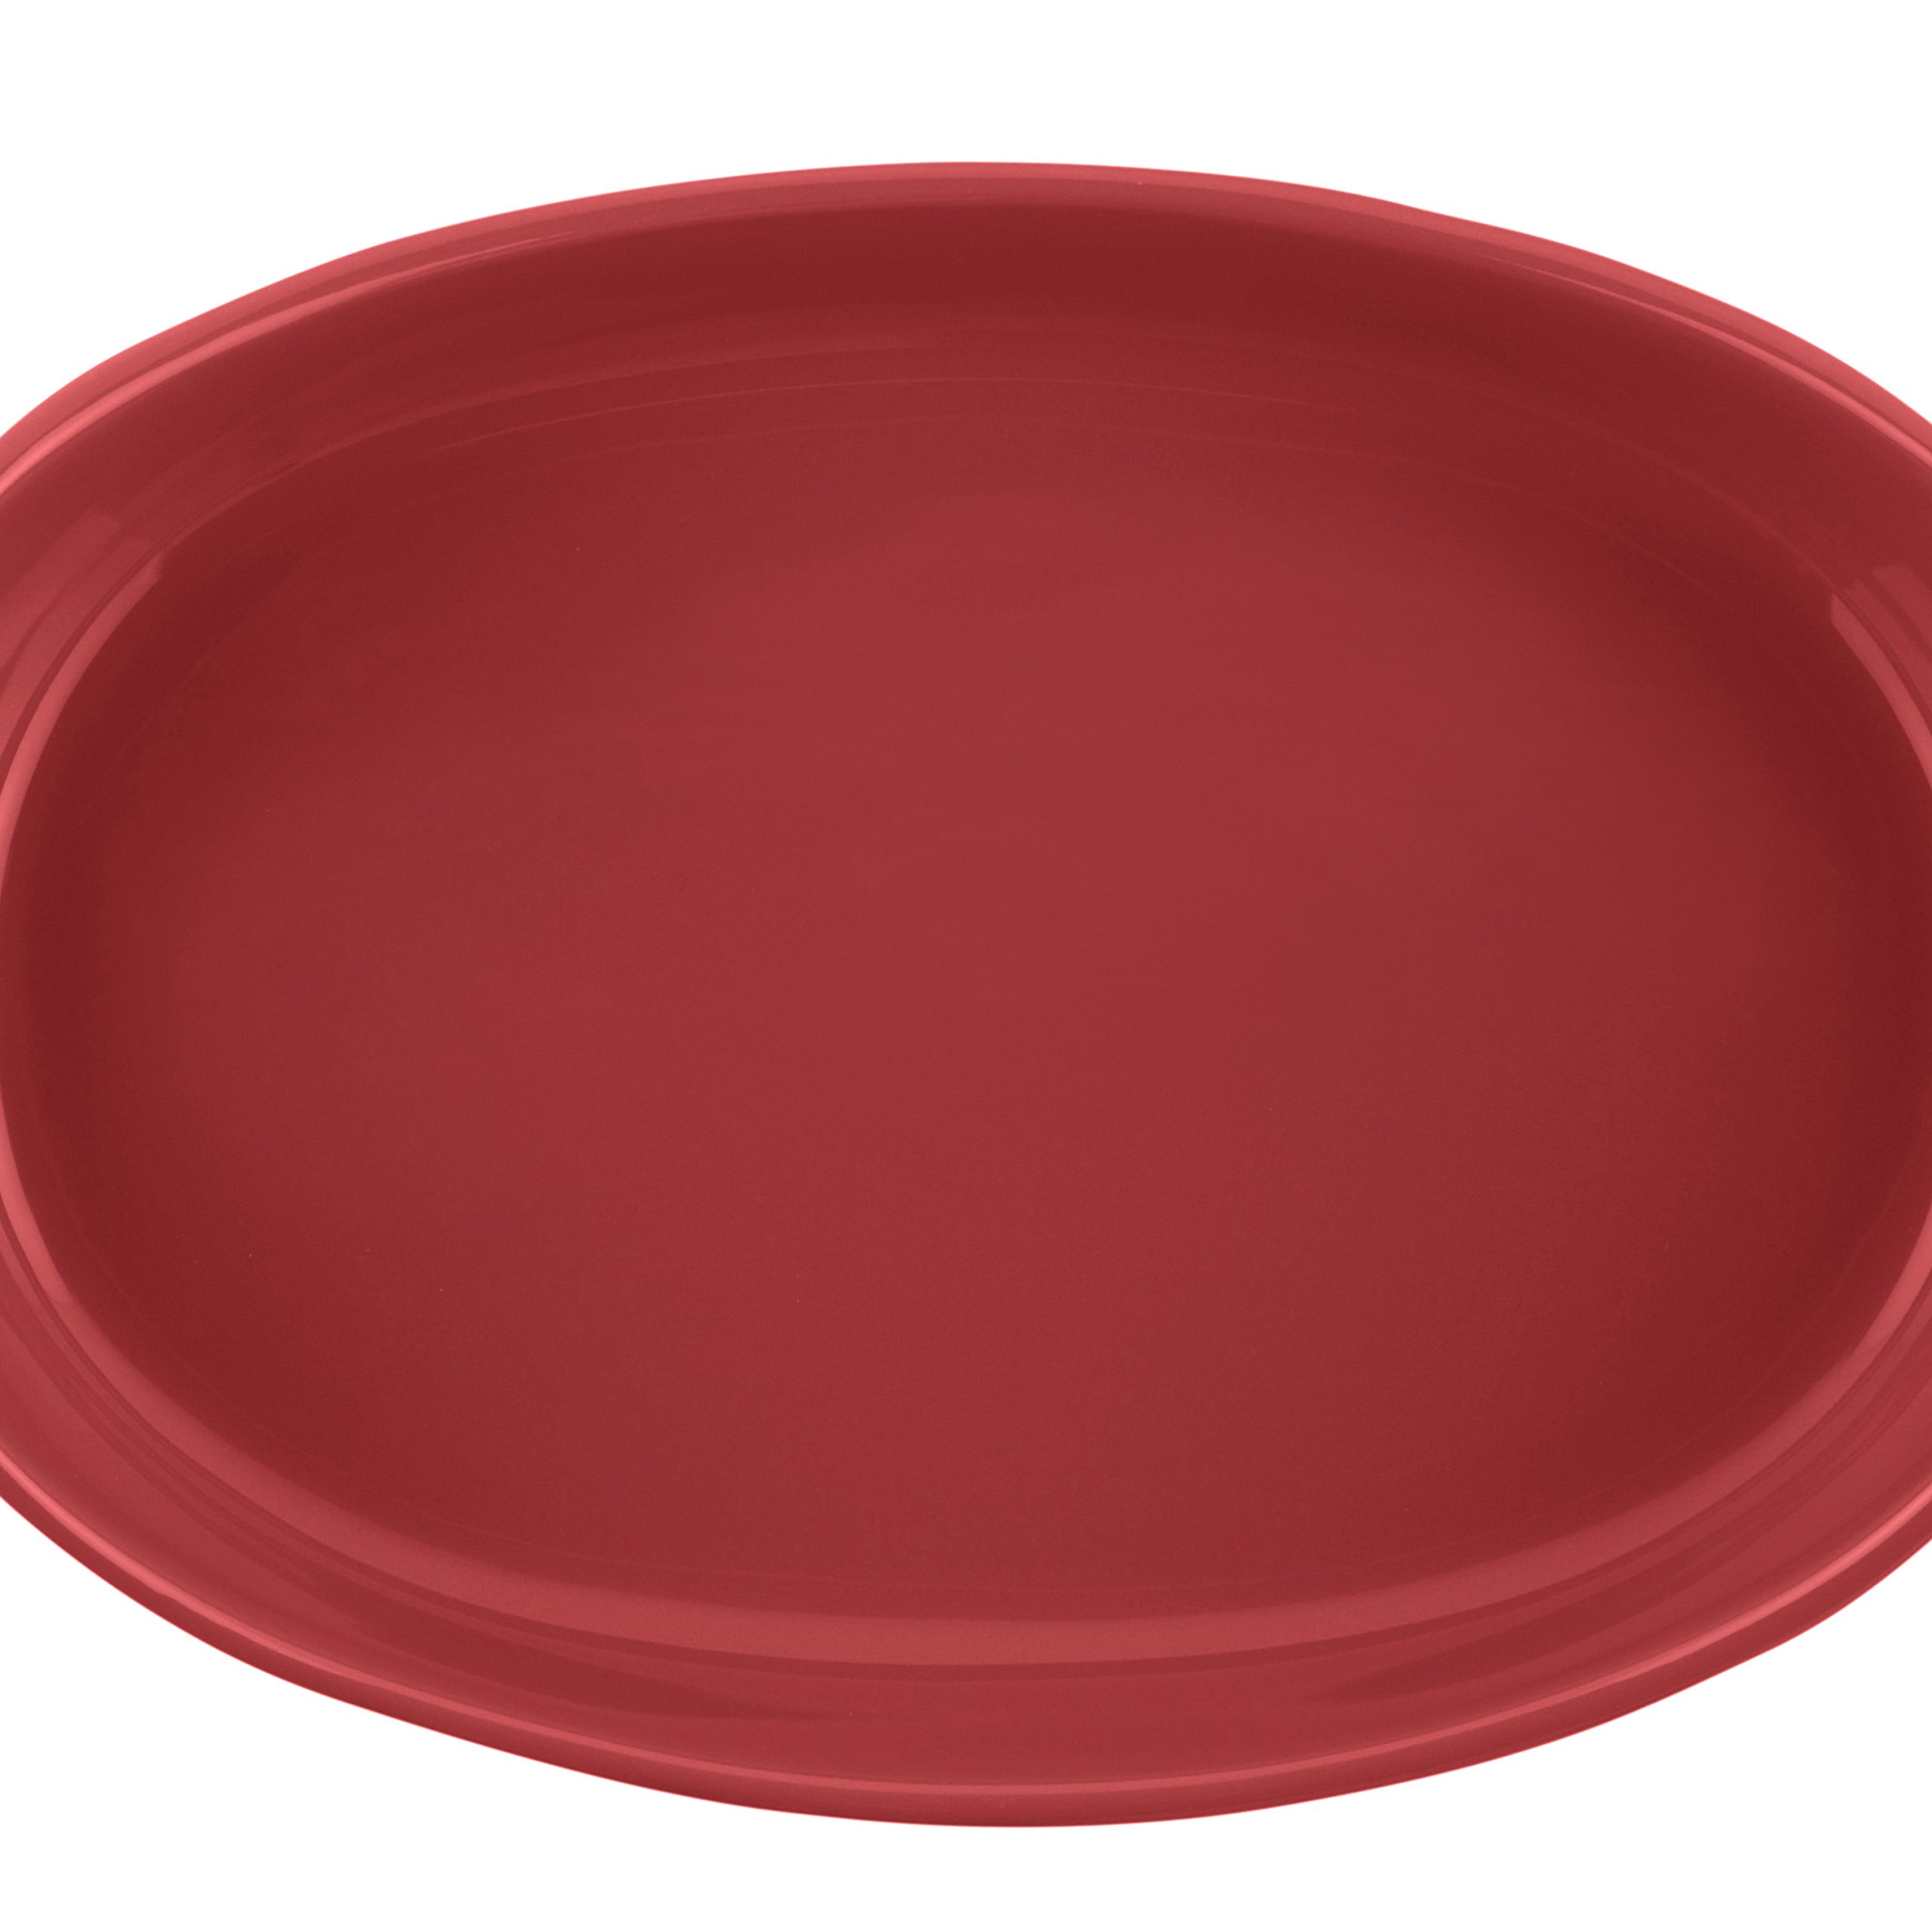 Rachael Ray Solid Glaze Ceramics Bakeware/Baking Pan Set - 2 Piece, Red